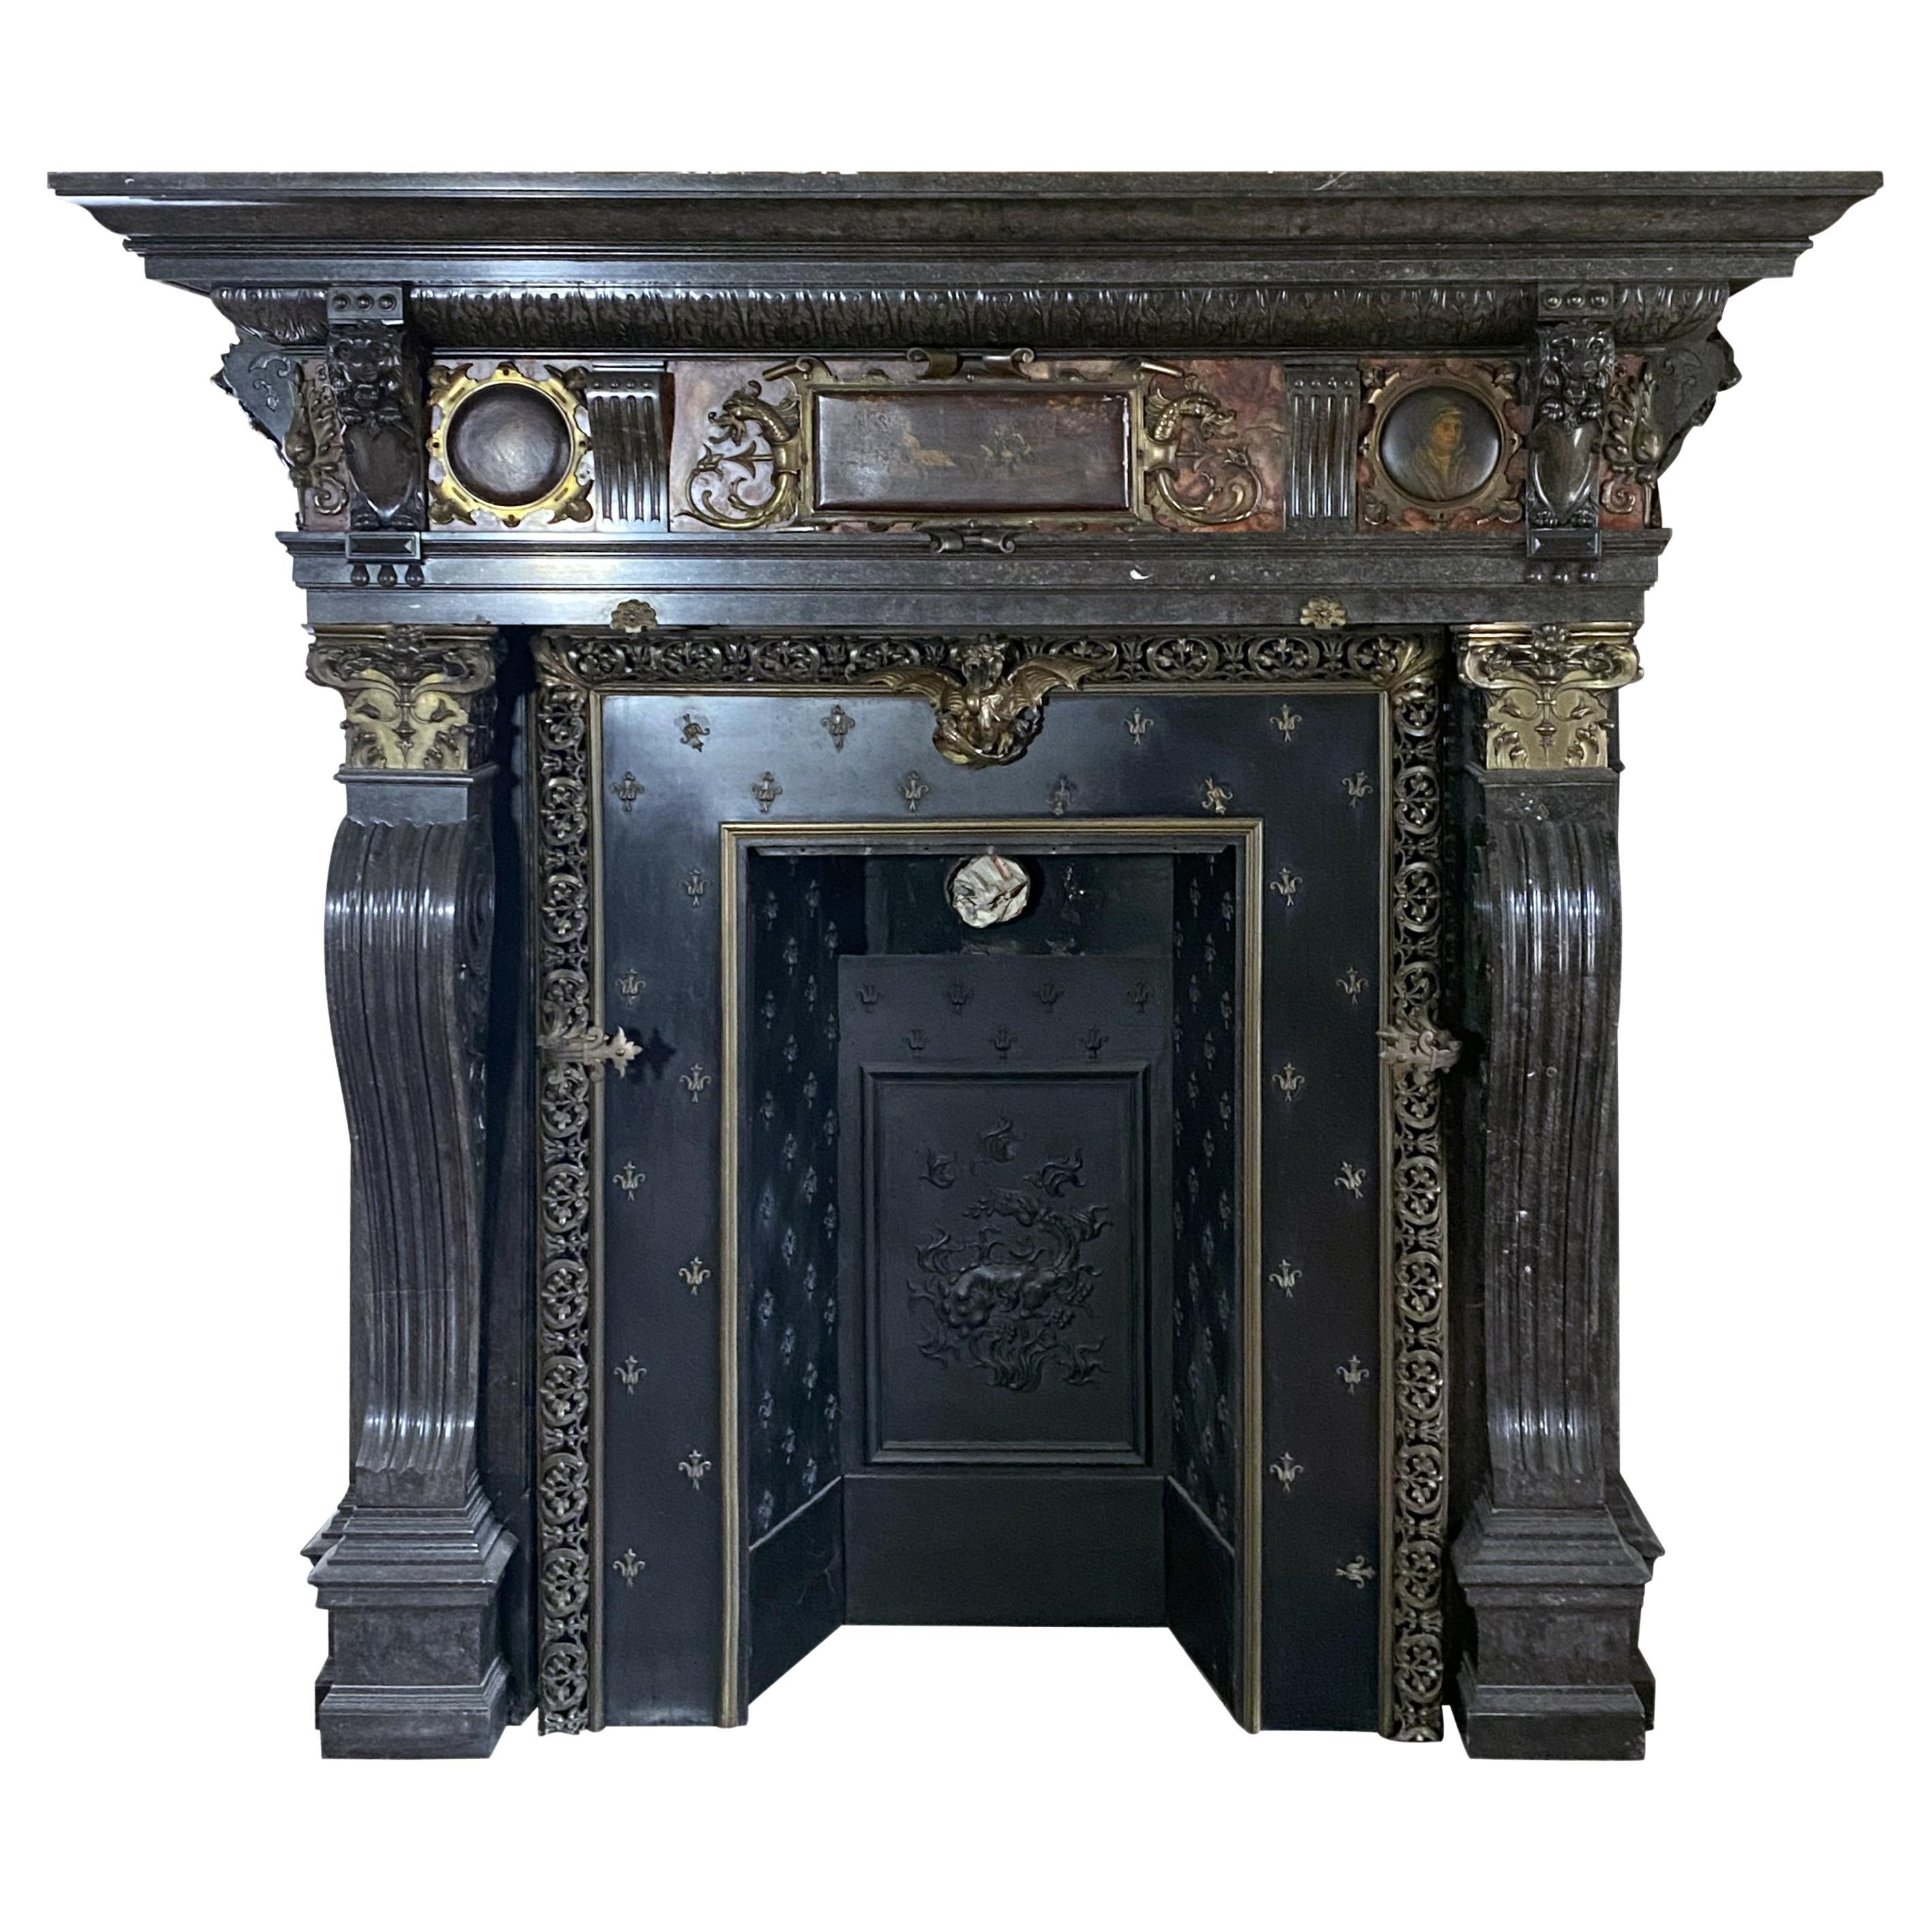 Flemish Neo-Renaissance Style Fireplace For Sale